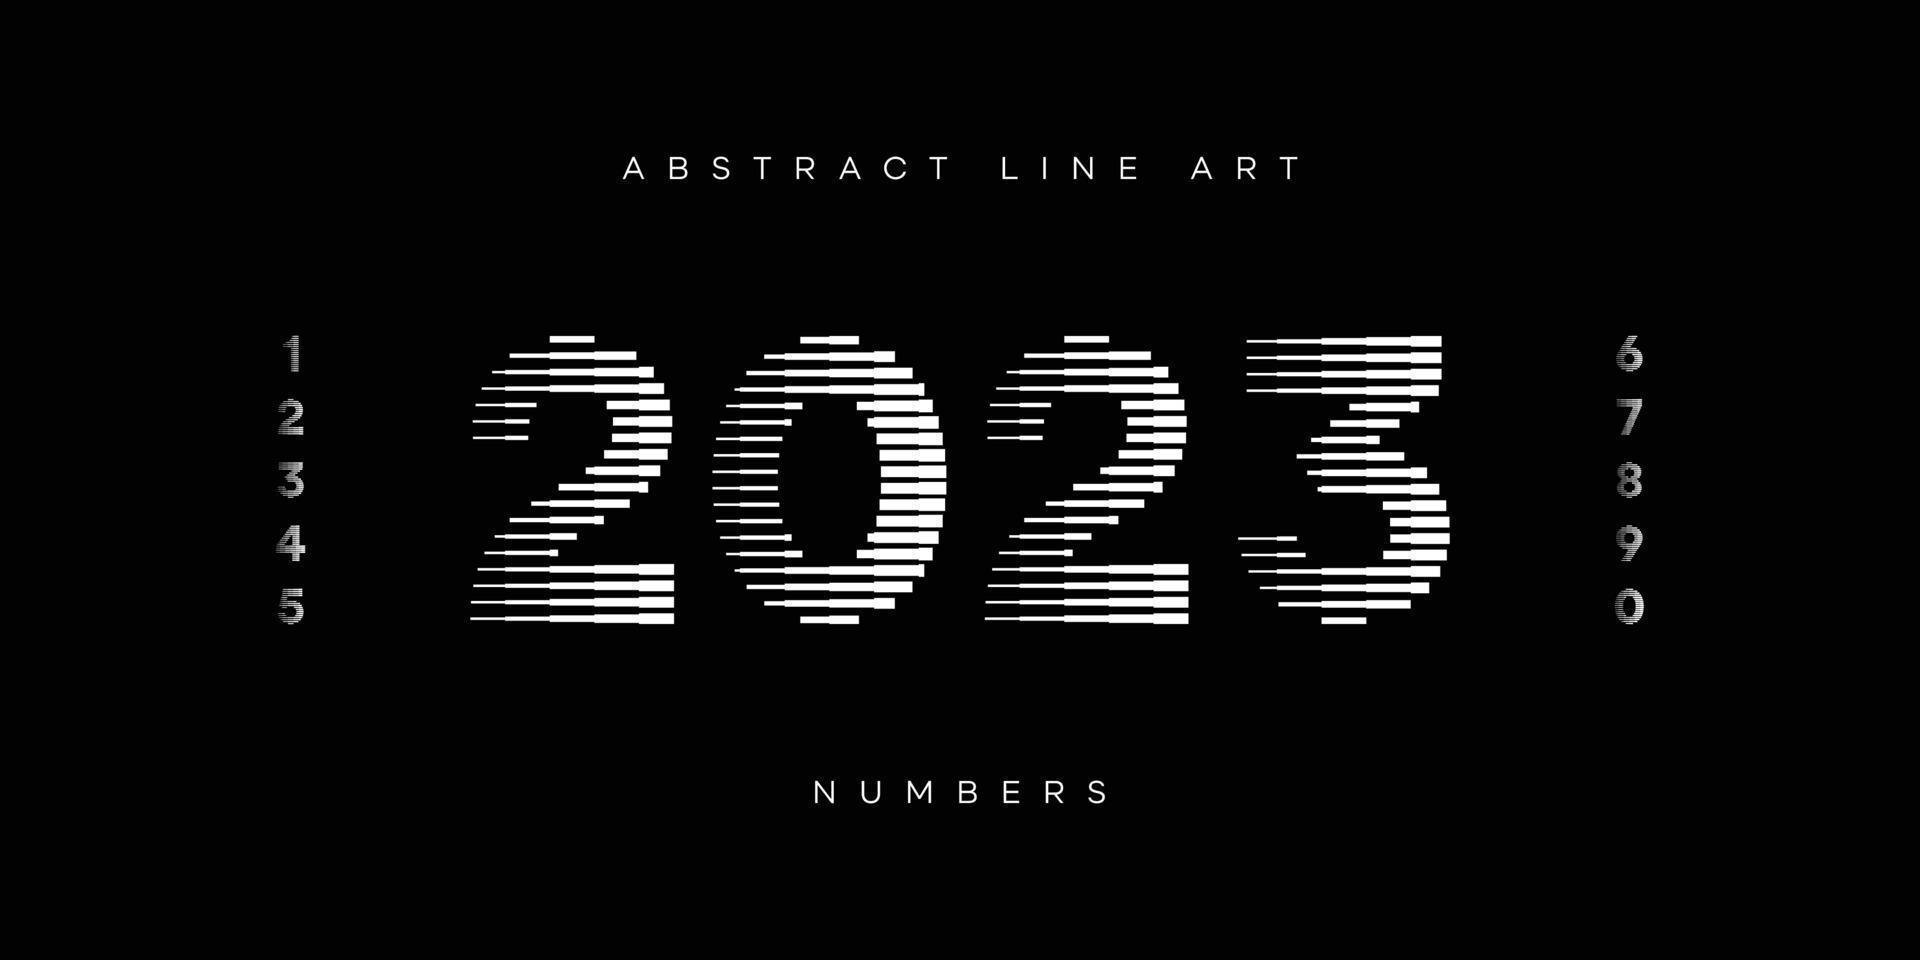 conjunto de números de arte de línea abstracta vector